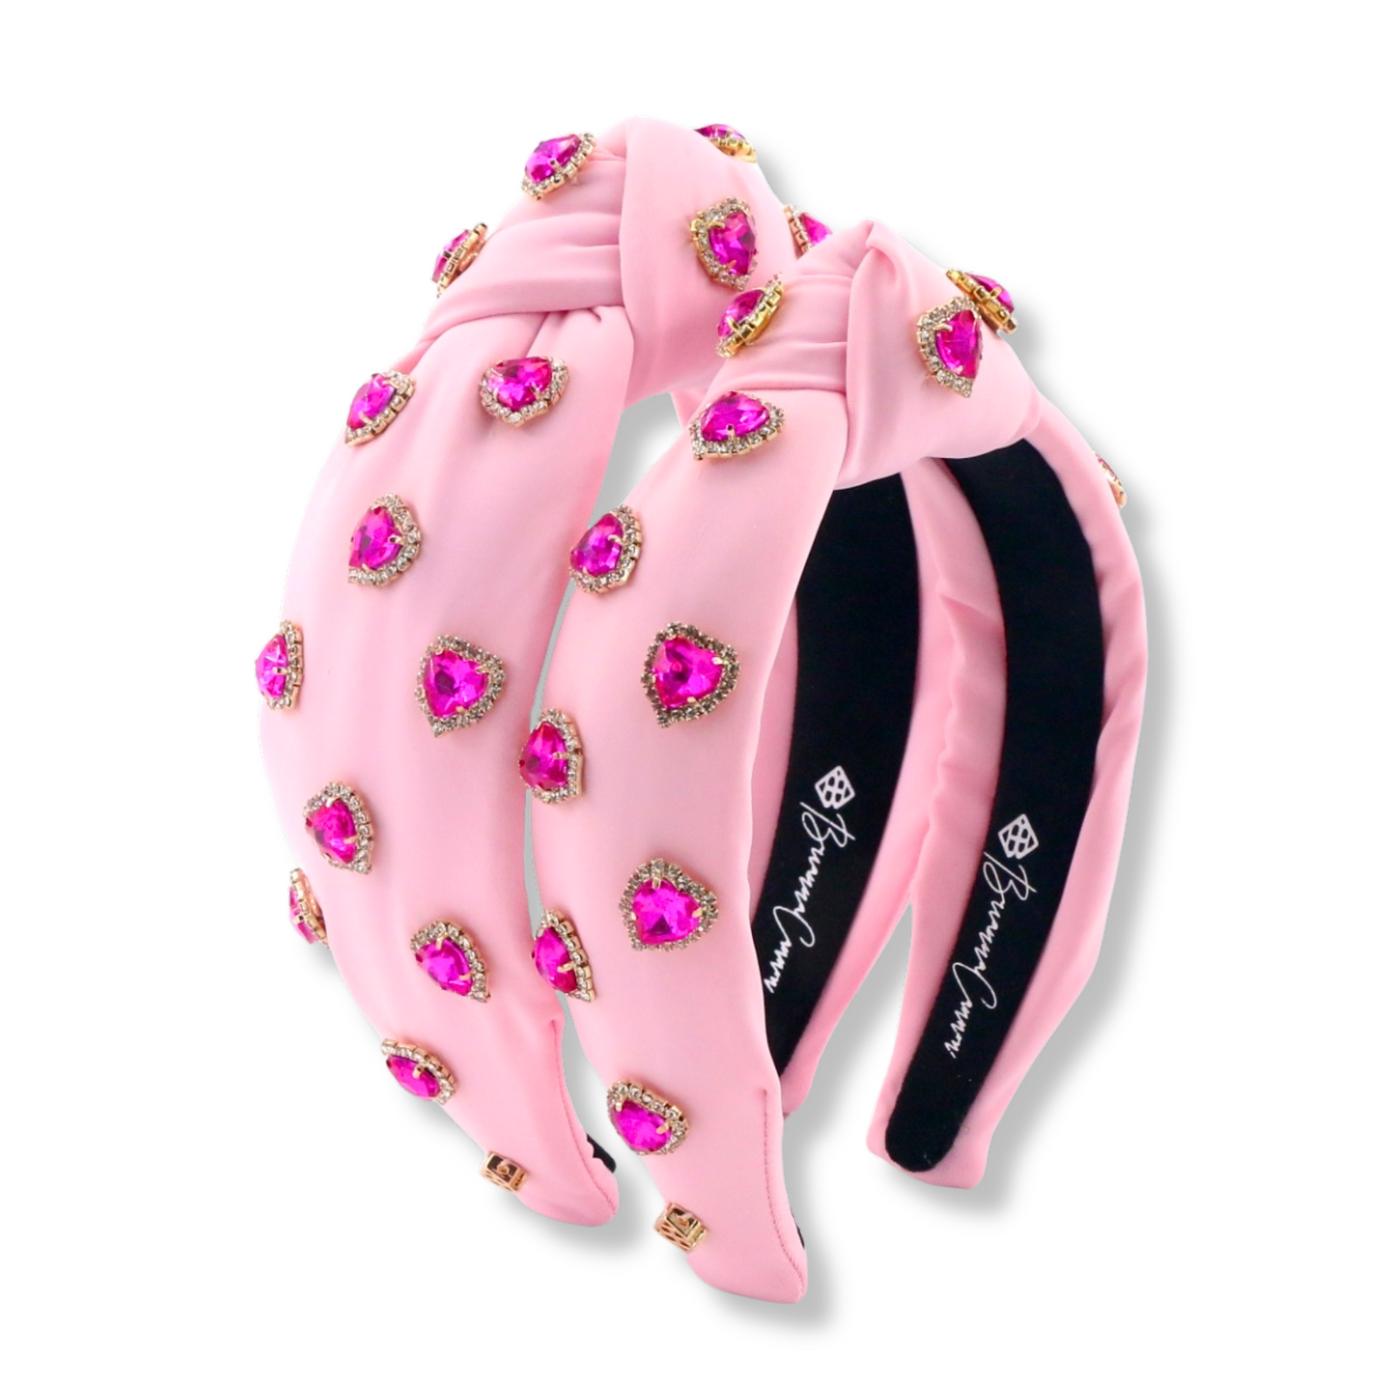 Child Size Light Pink Headband with Hot Pink Pavé Crystal Hearts